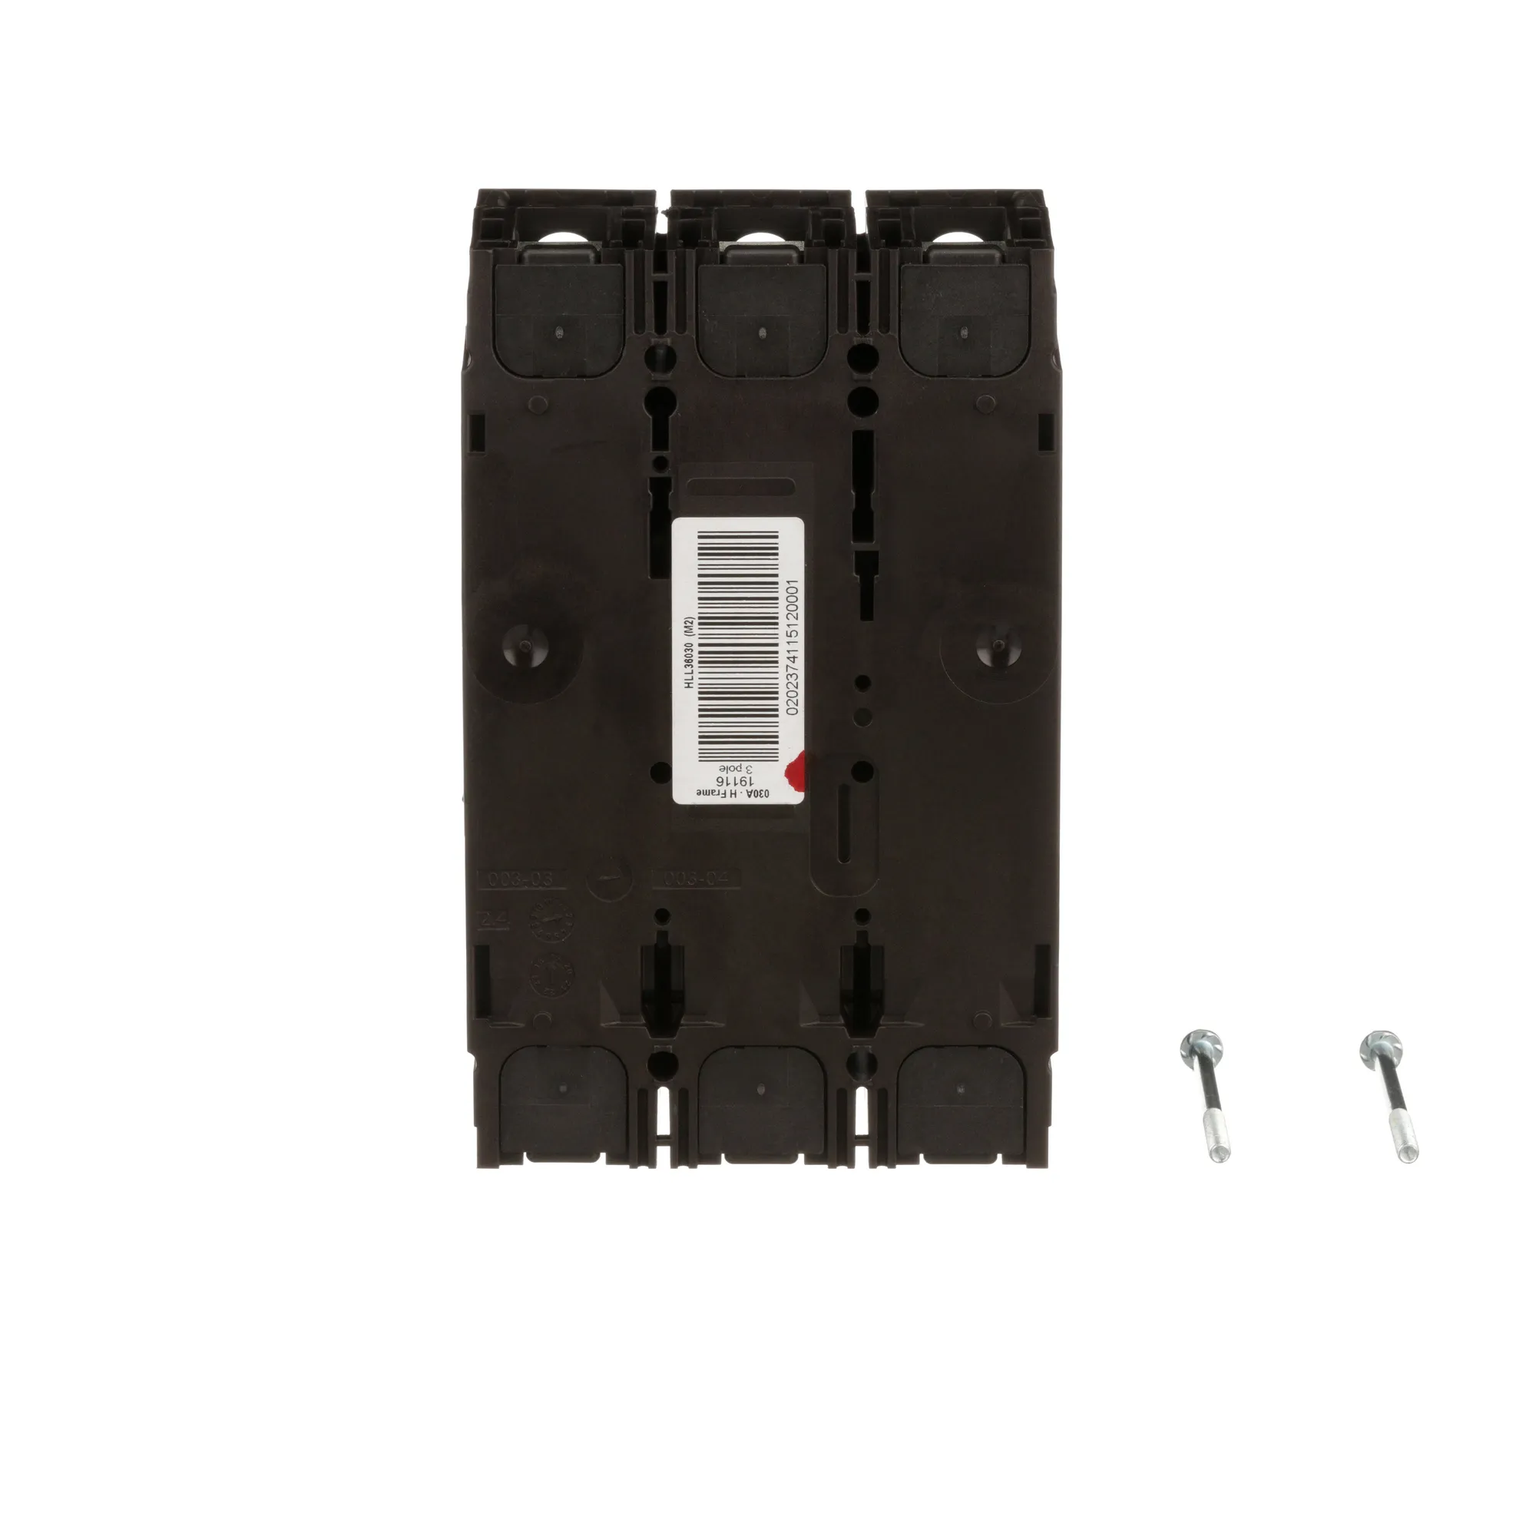 HLL36030 - Square D - Molded Case Circuit Breaker